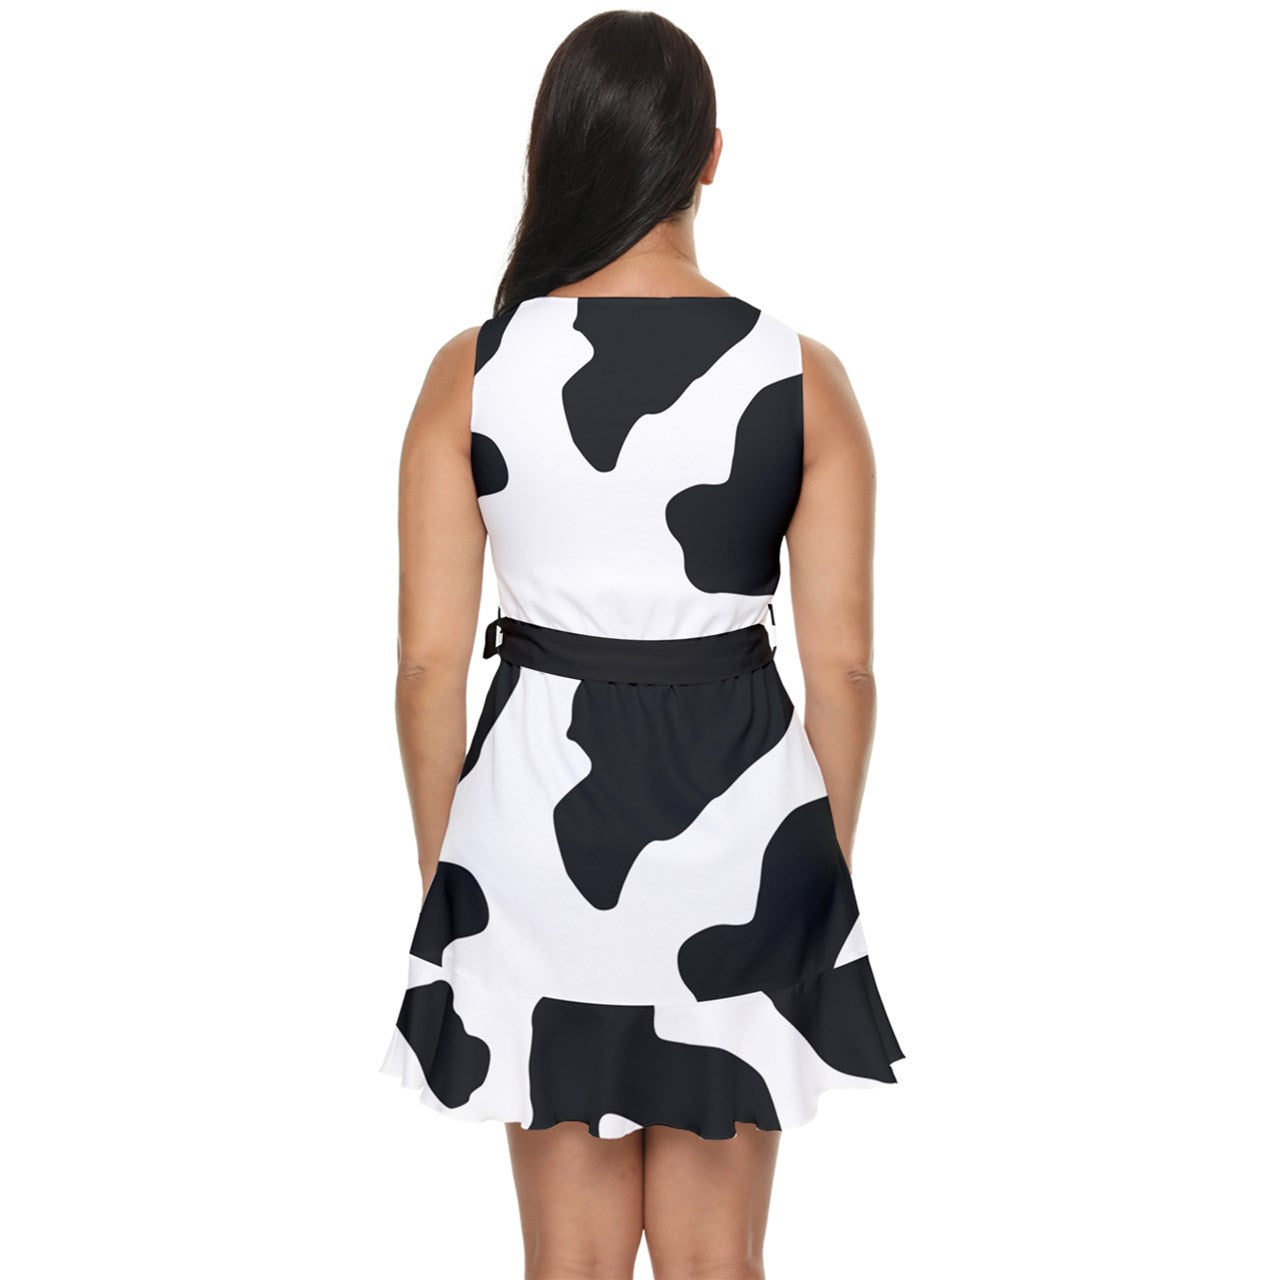 Cow Print Mini Chiffon Tier Dress with Tie - Black